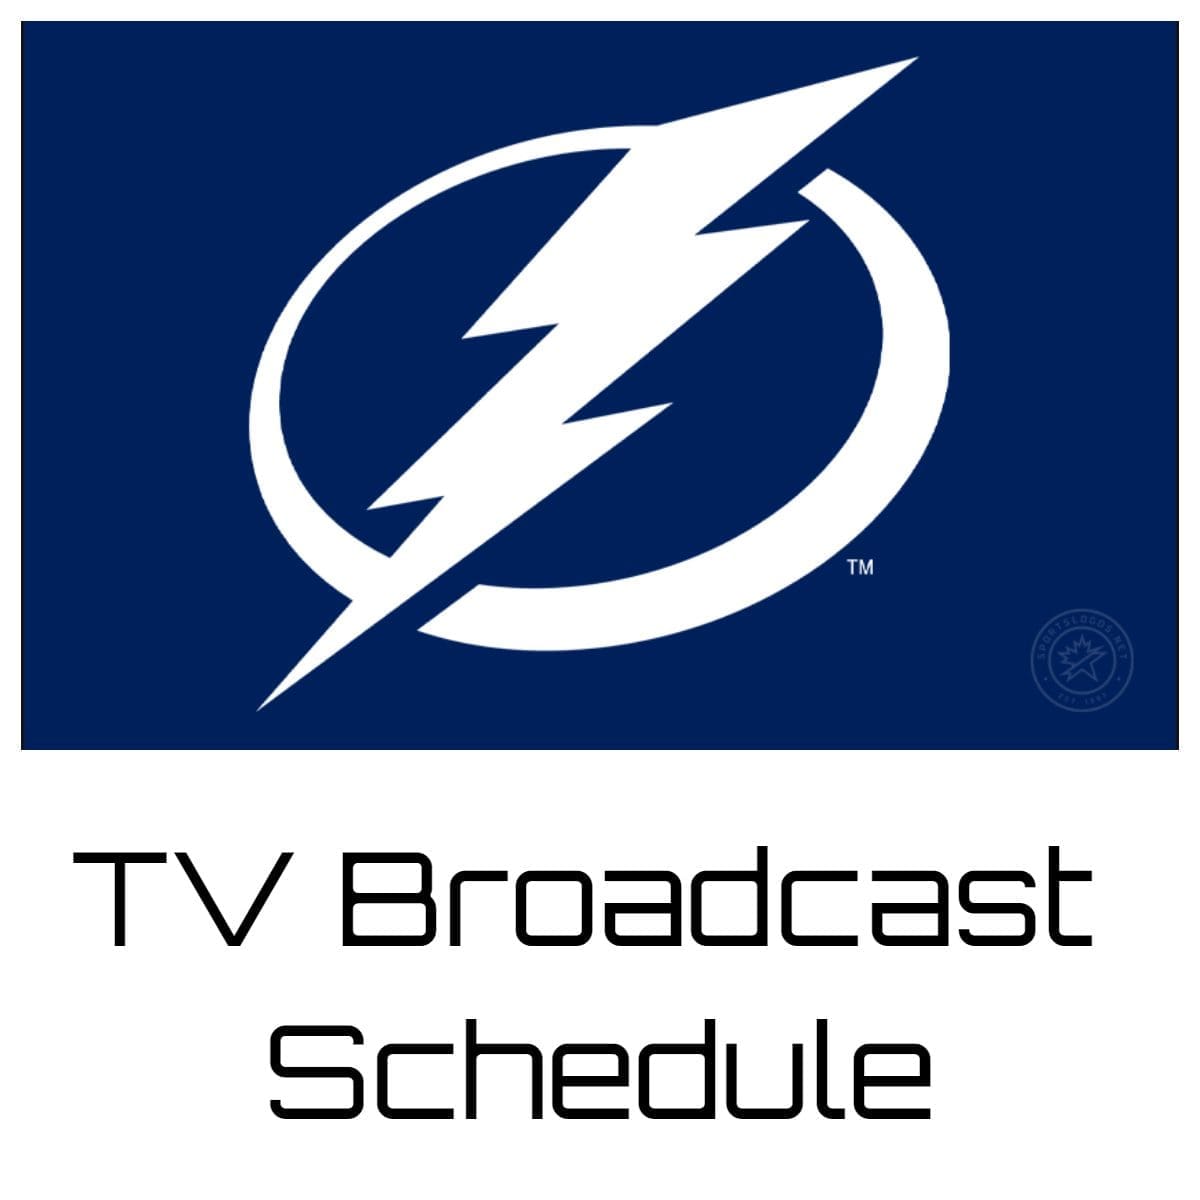 Tampa Bay Lightning TV Broadcast Schedule